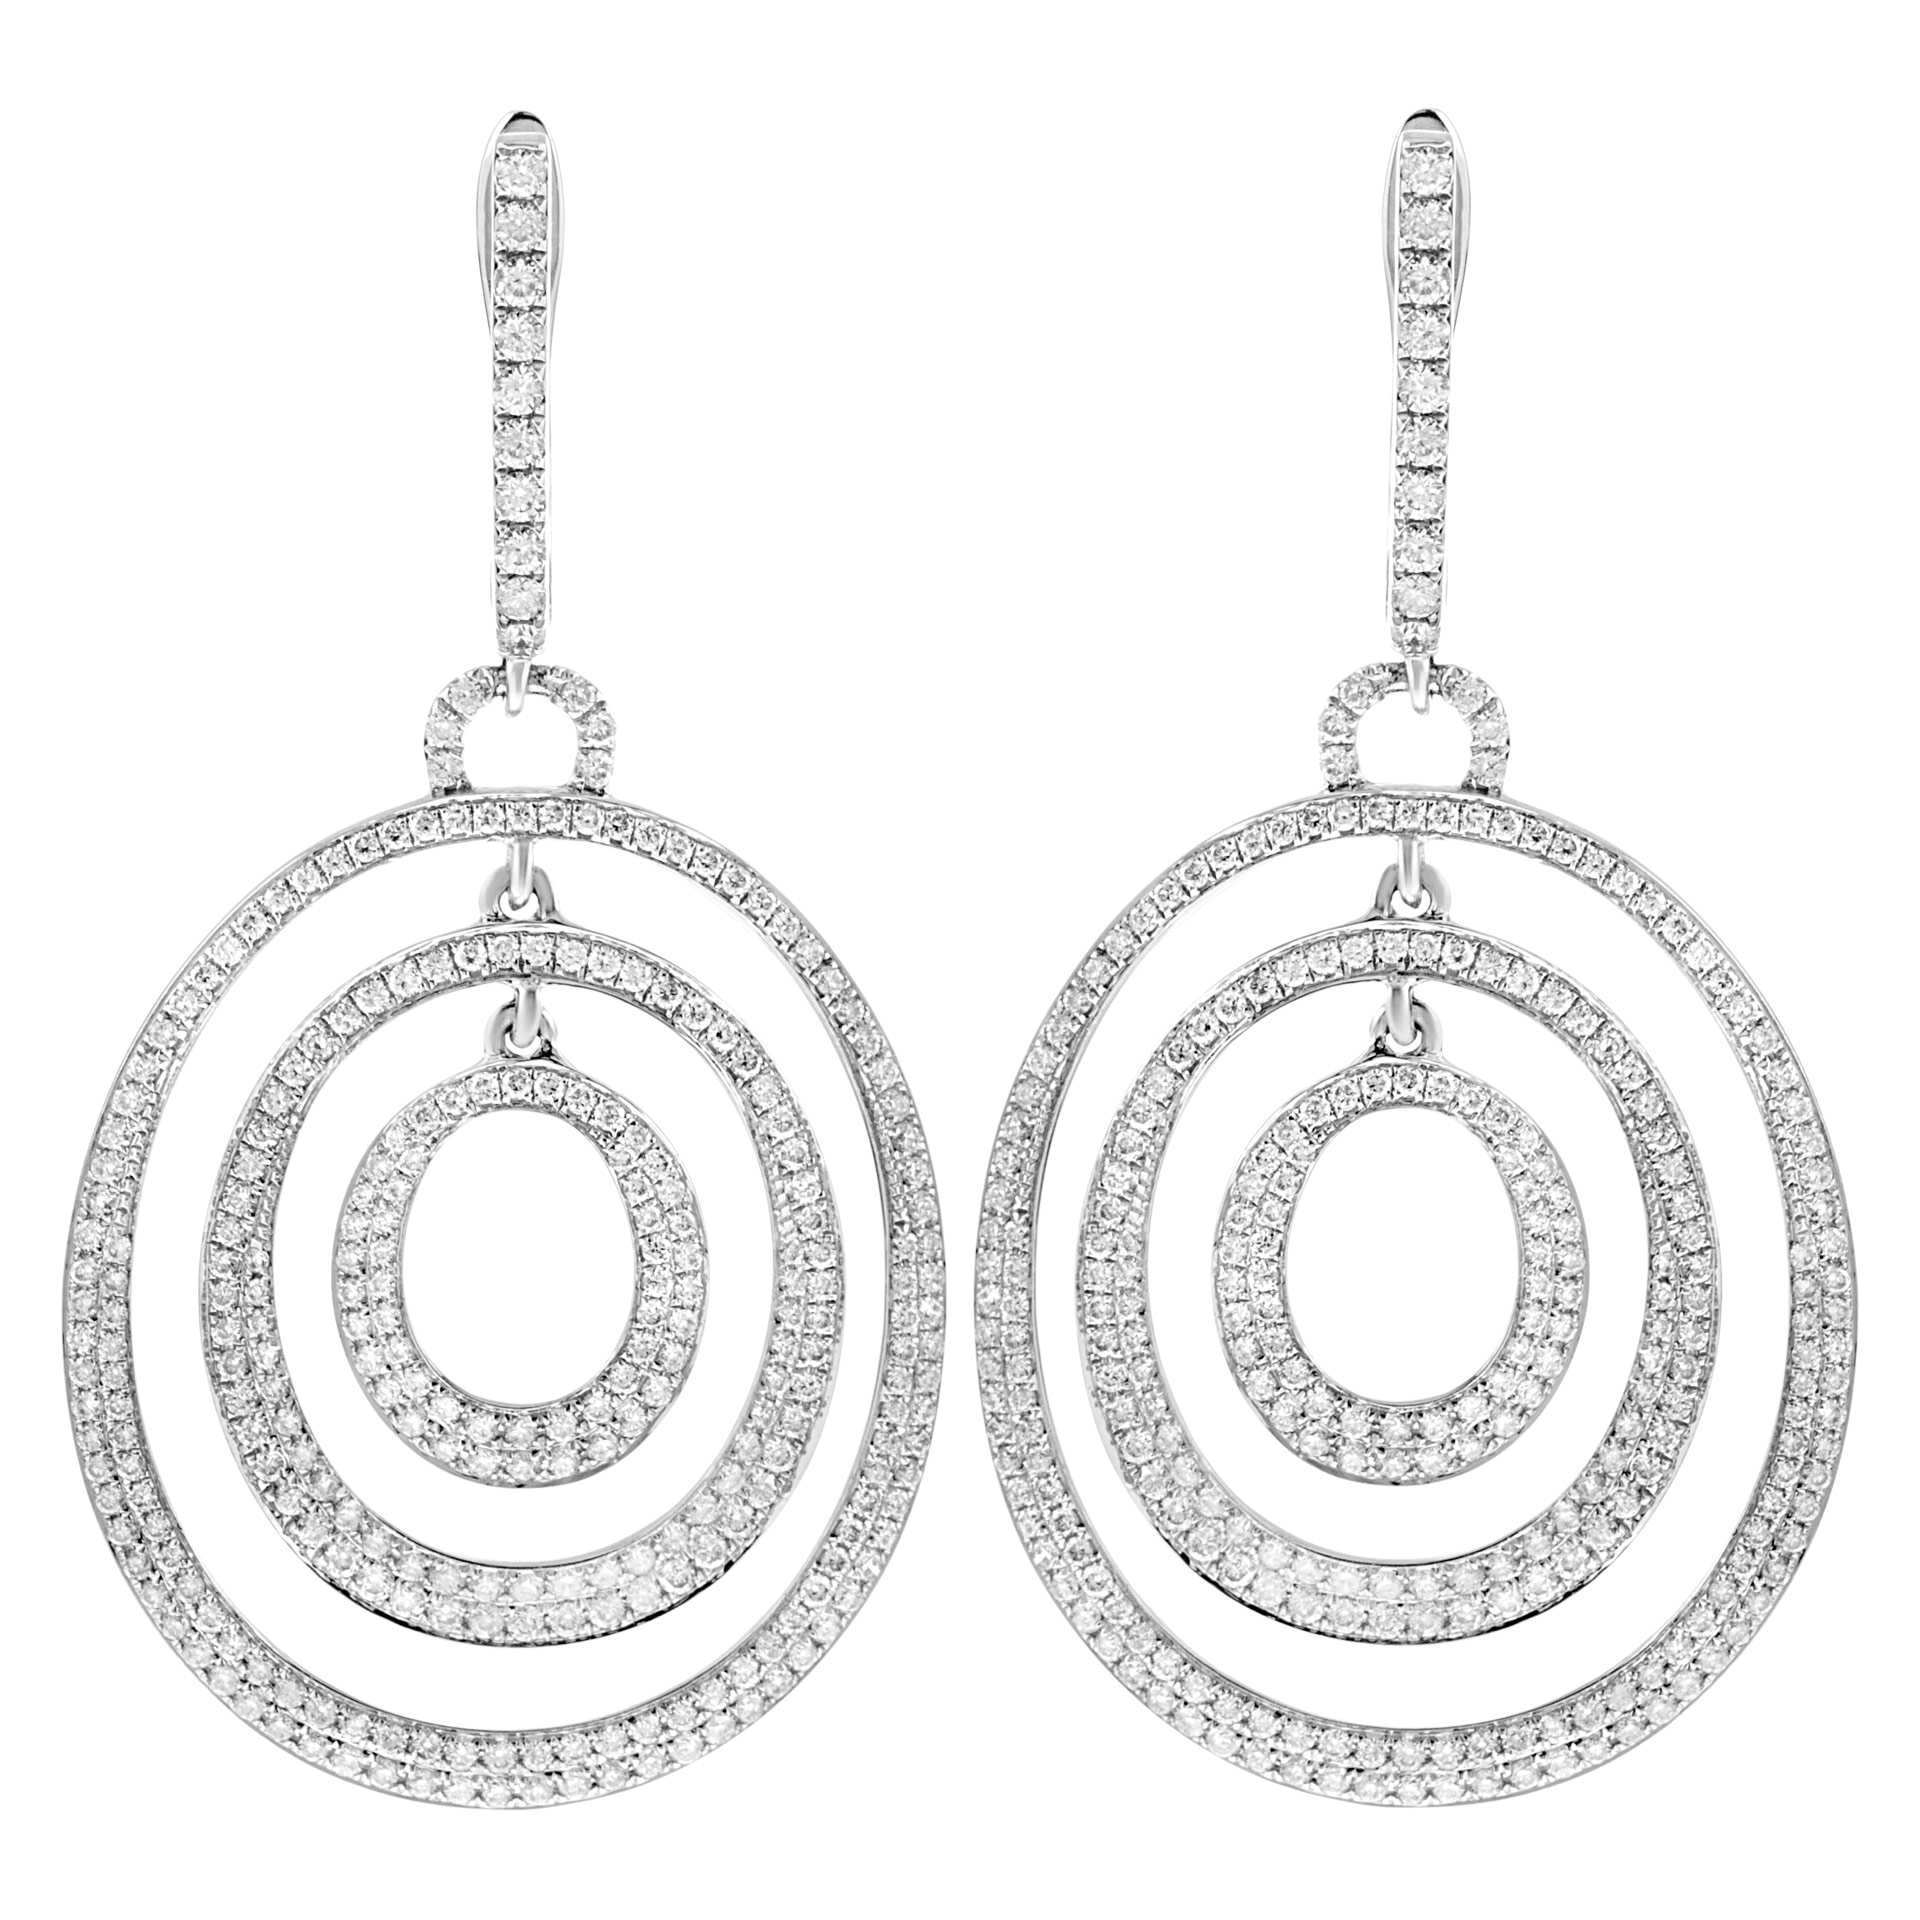 Circles of Love diamond earrings in white gold